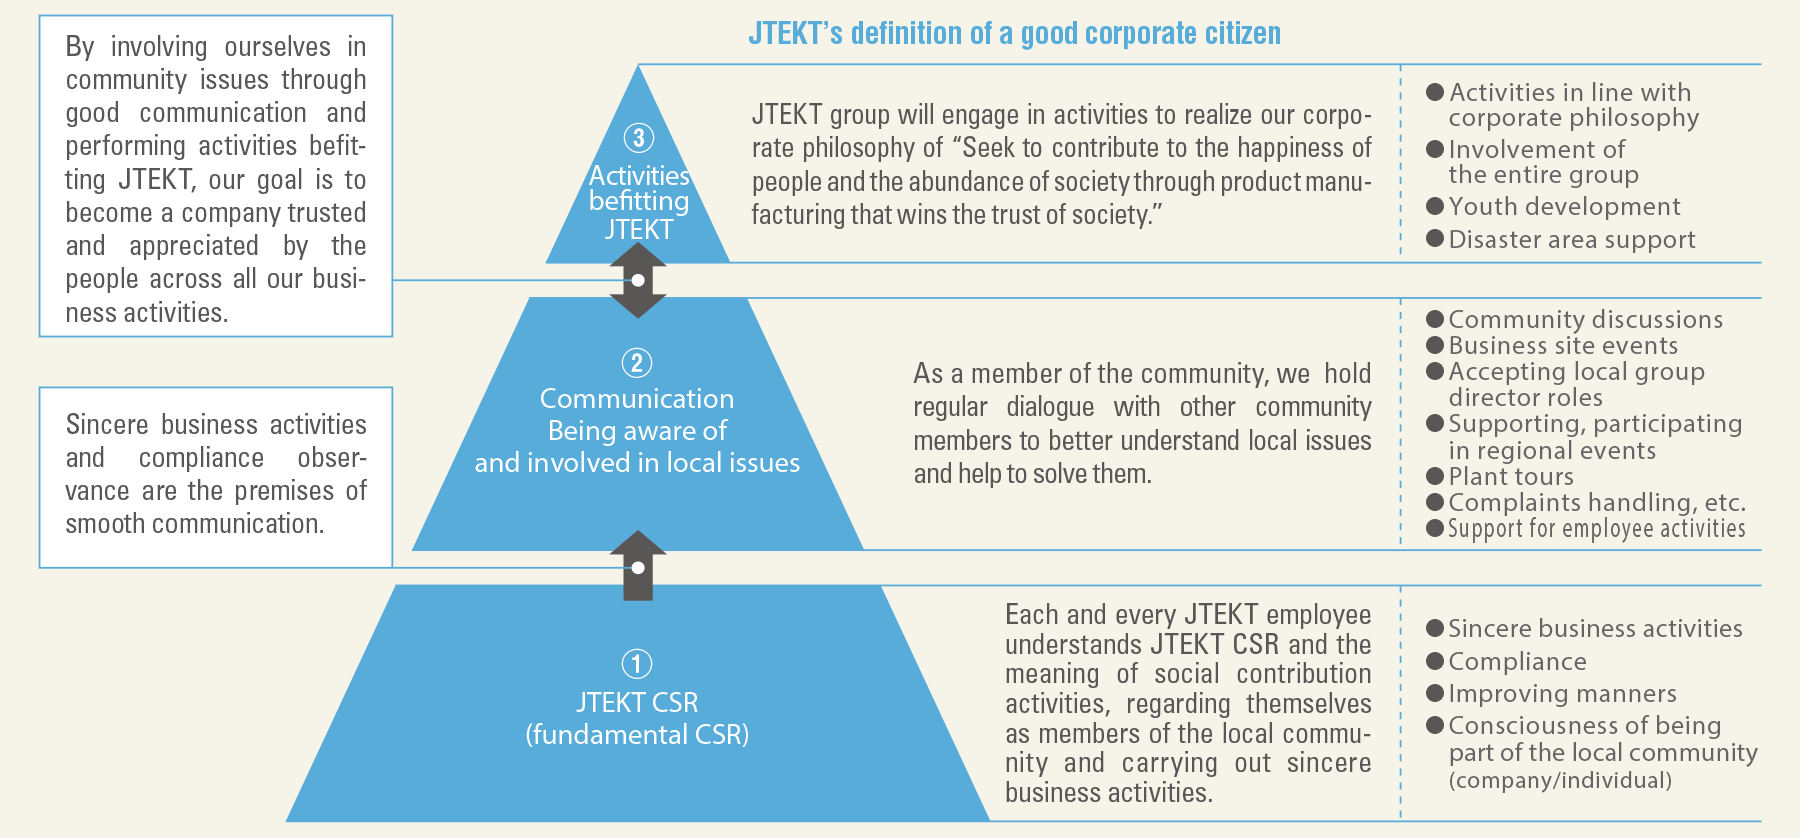 JTEKT’s definition of a good corporate citizen